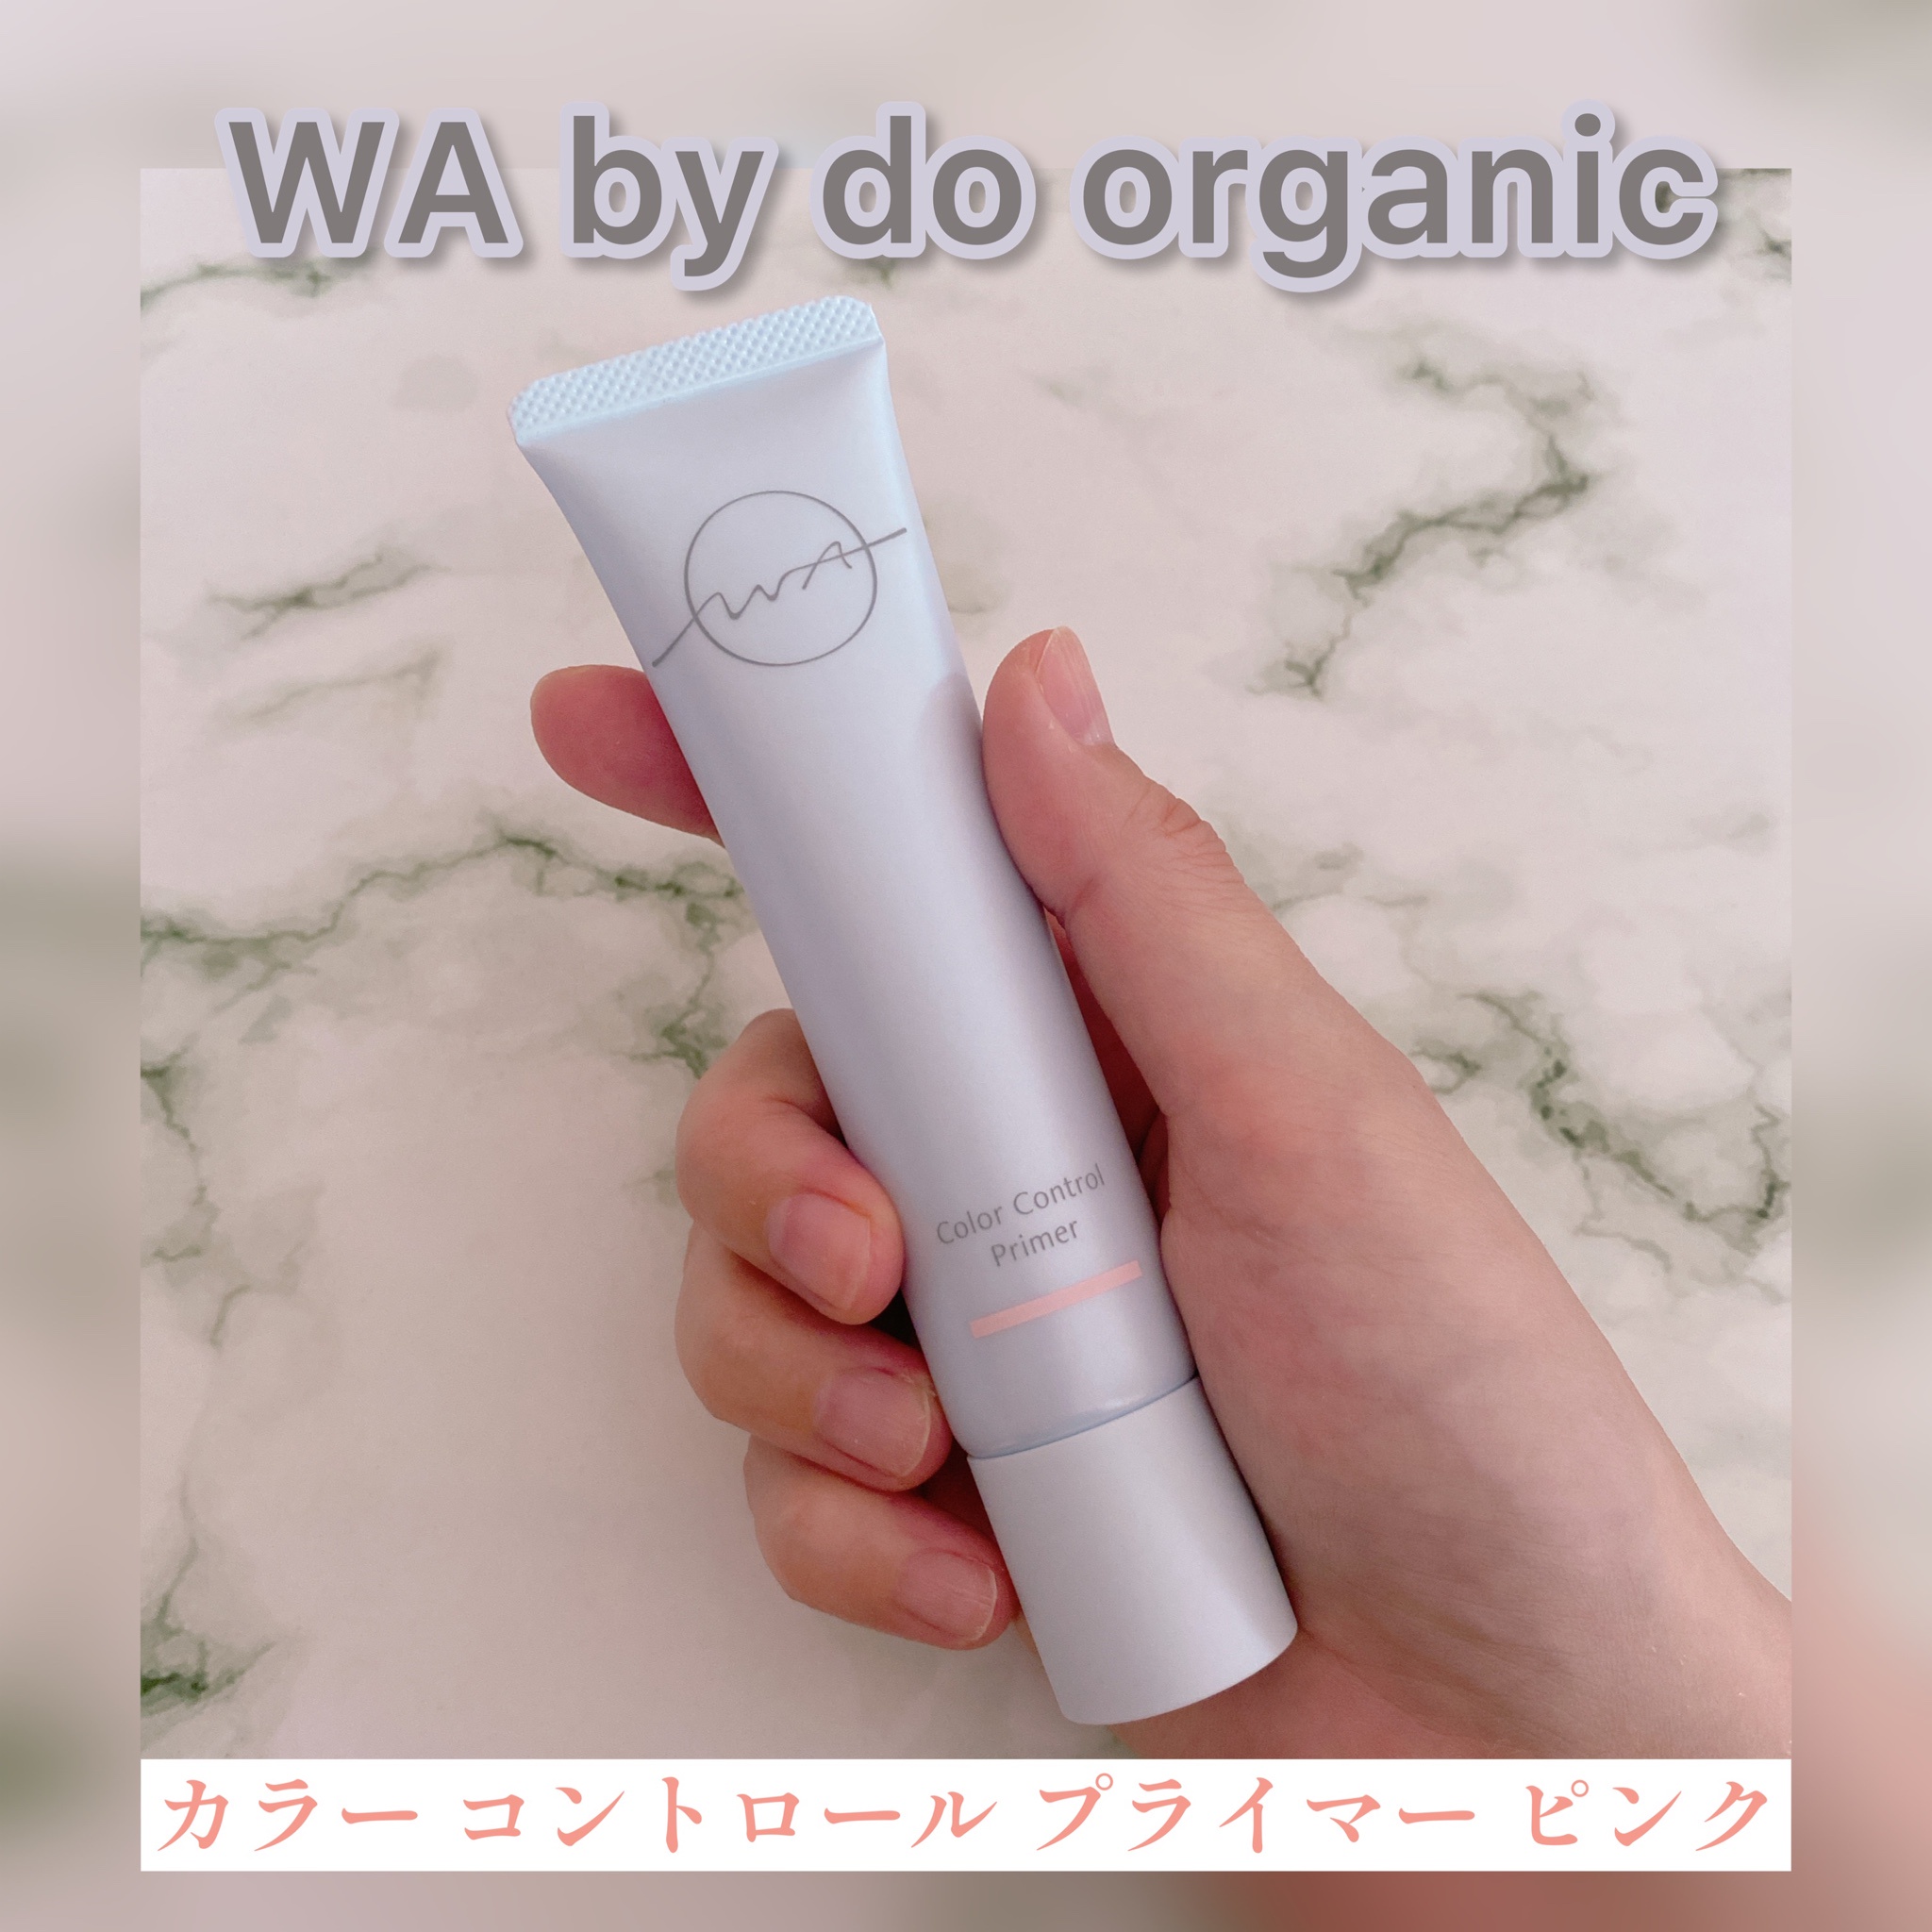 WA by do organic カラーコントロールプライマー